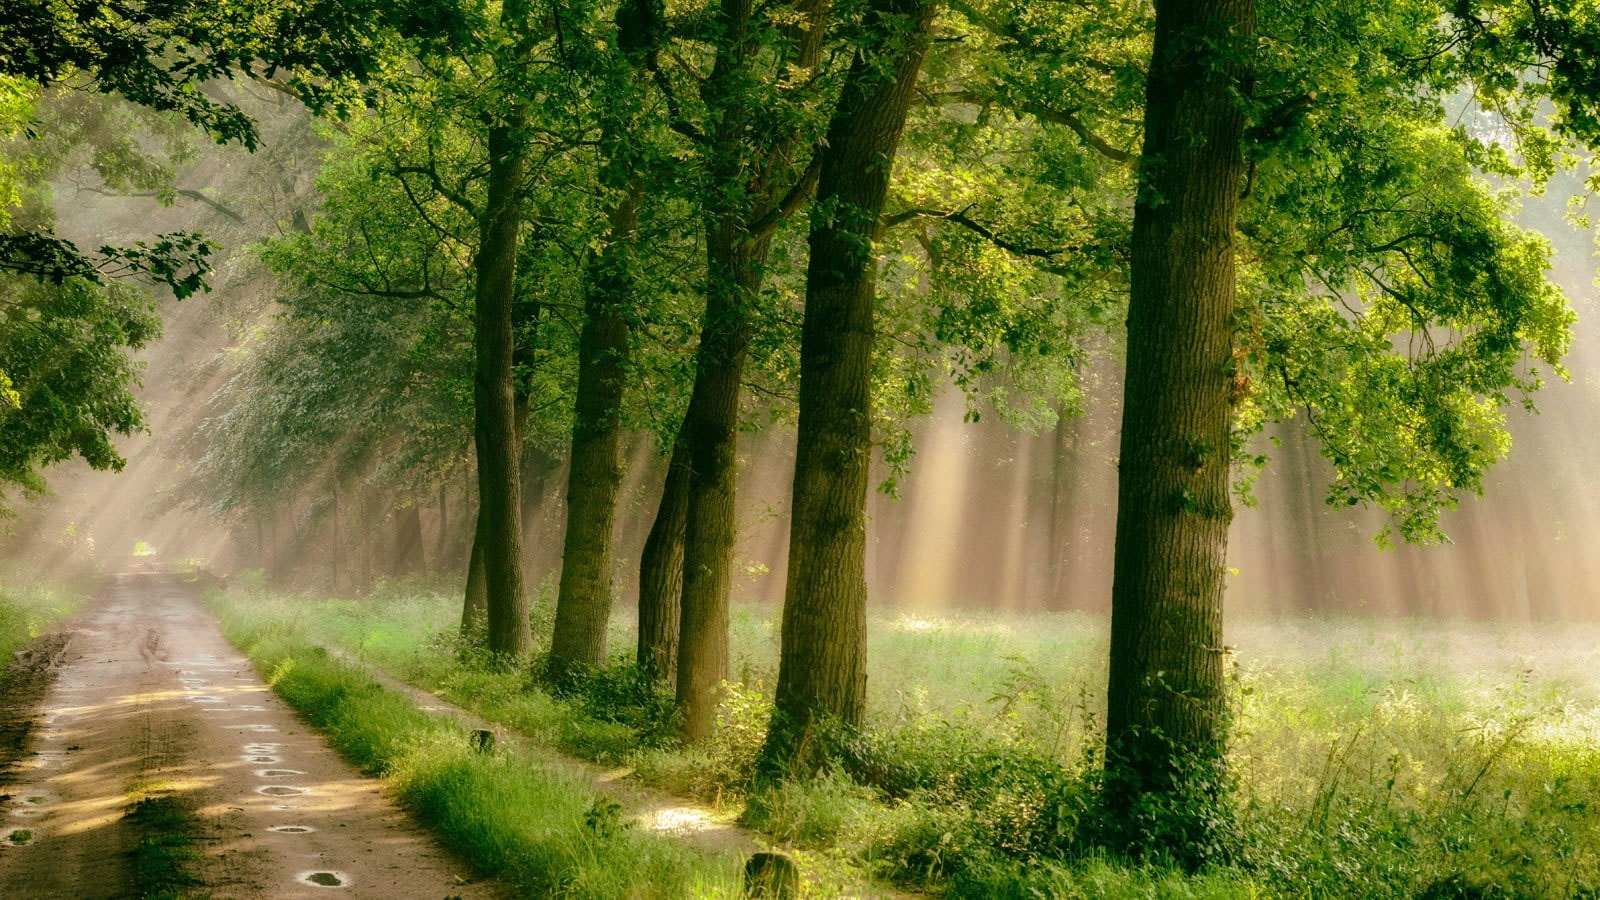 Green leafed trees, forest, road, grass, mist, path, rain, sunlight